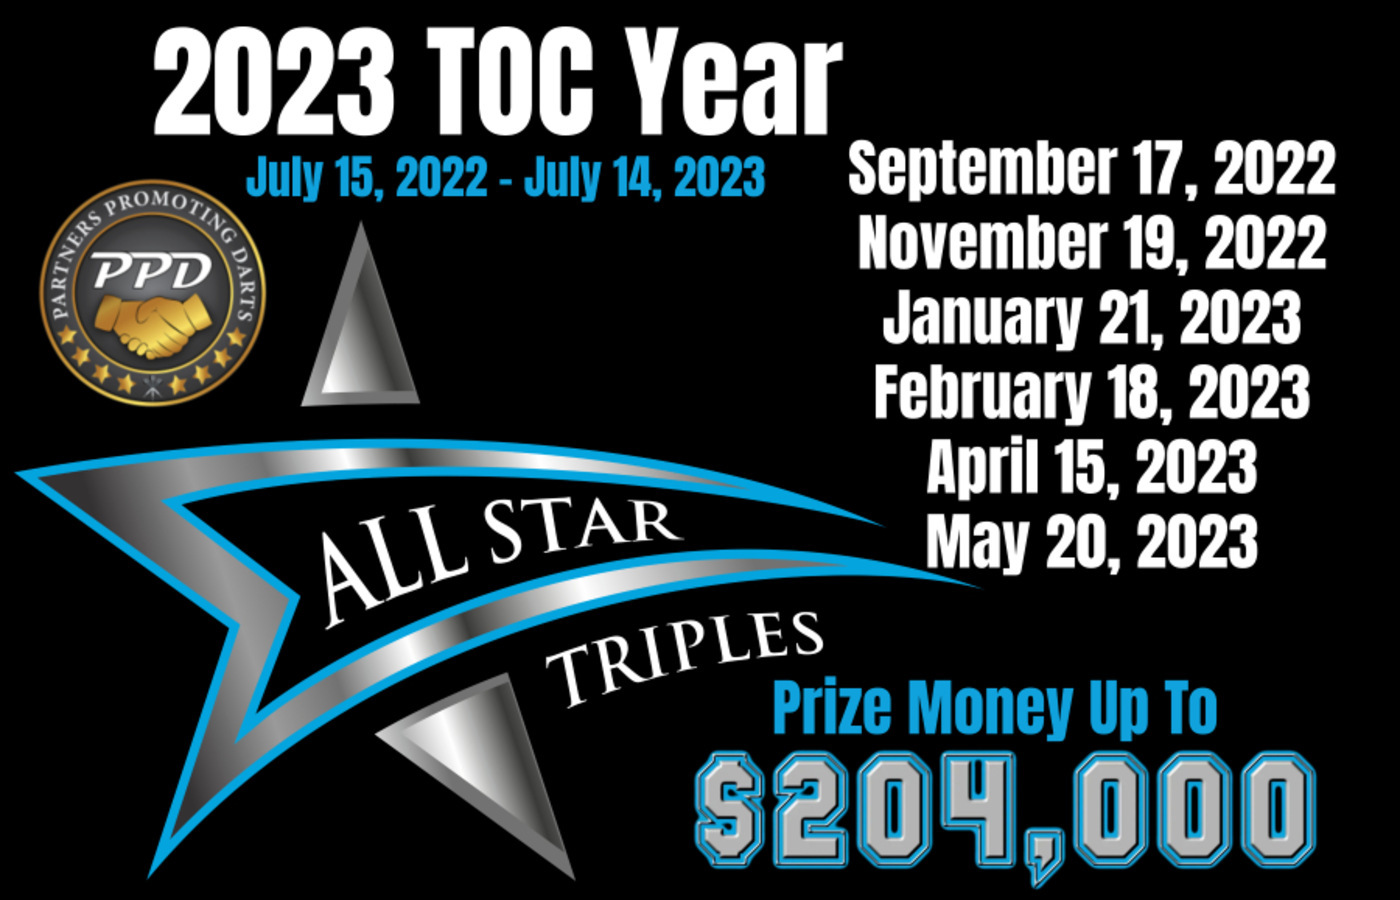 Jan 21, 2023 - All Star Triples Image